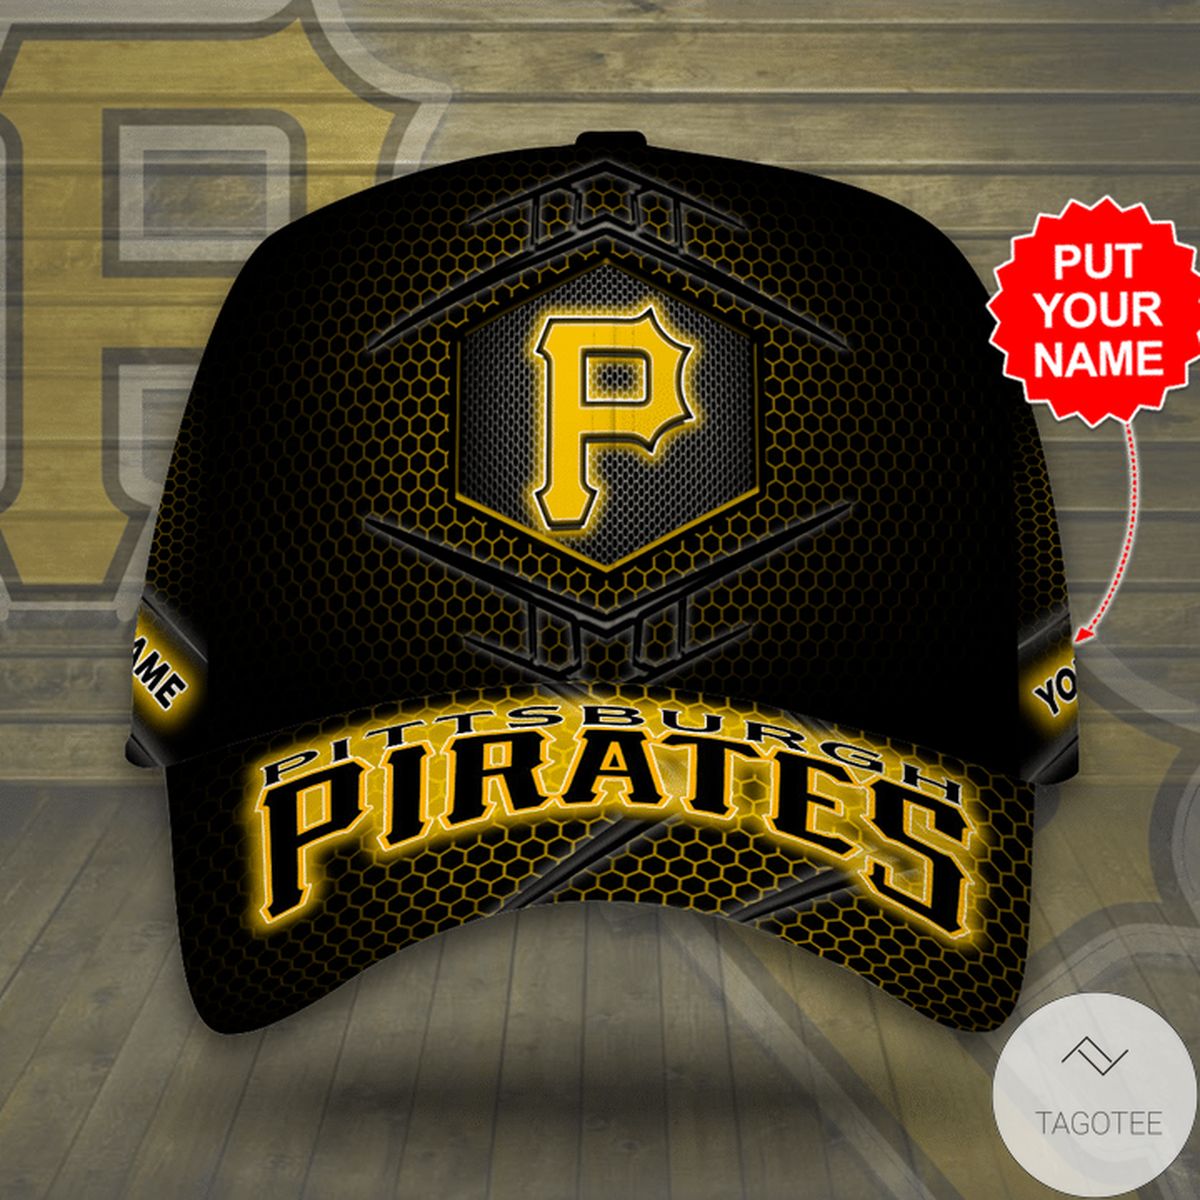 Personalized Pittsburgh Pirates Cap